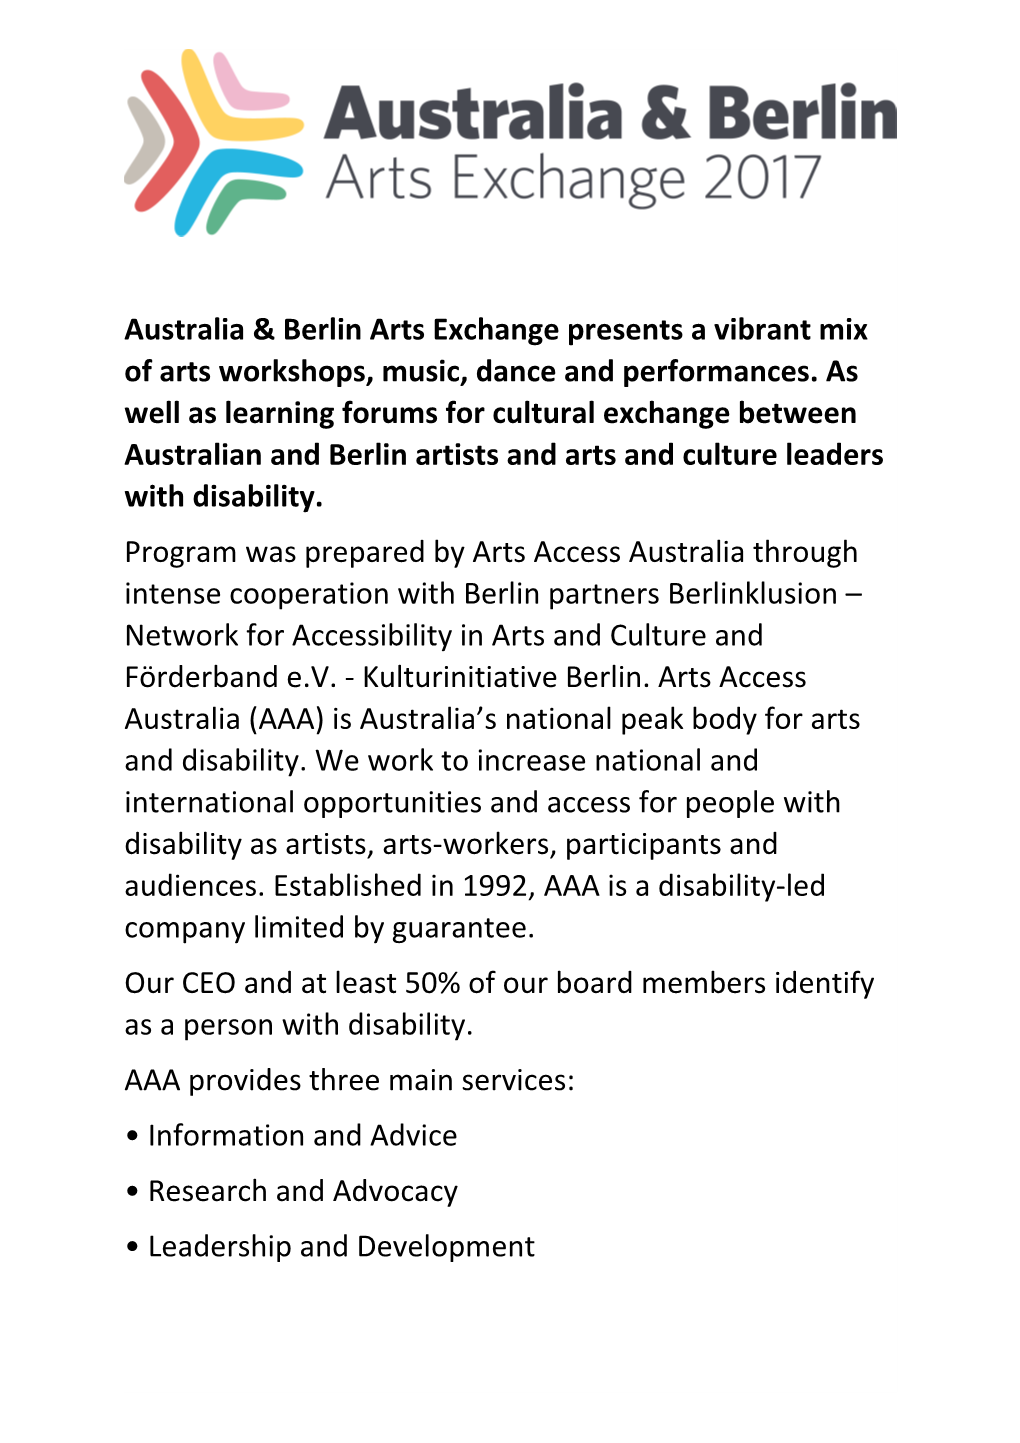 Australia & Berlin Arts Exchange Presents a Vibrant Mix of Arts Workshops, Music, Dance